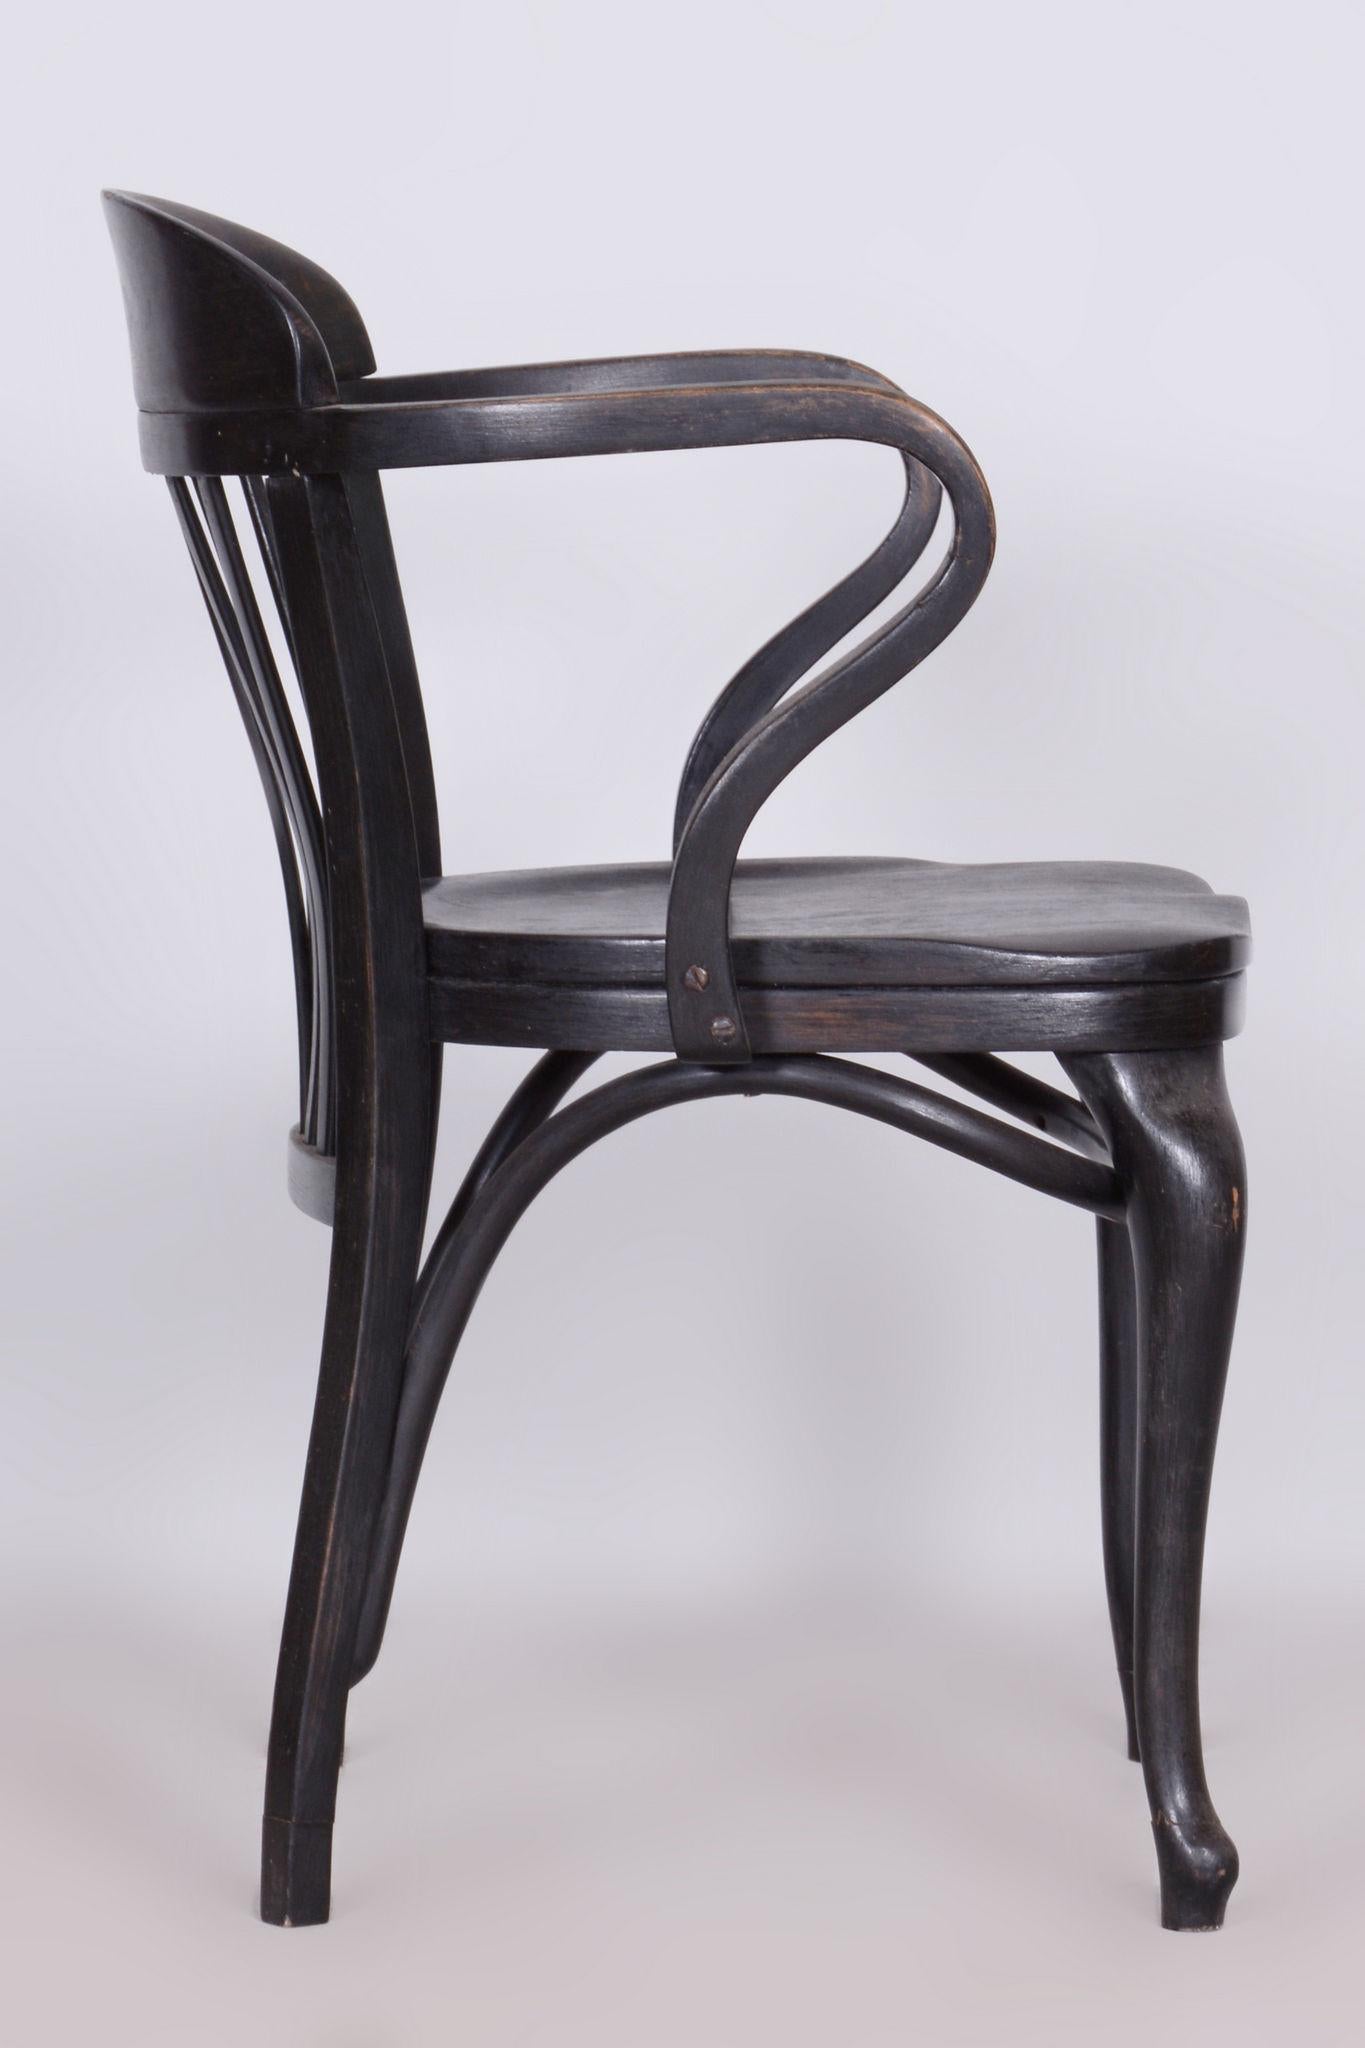 20th Century Restored Black ArtDeco Beech Armchair, Thonet Company, Austria, 1920s For Sale